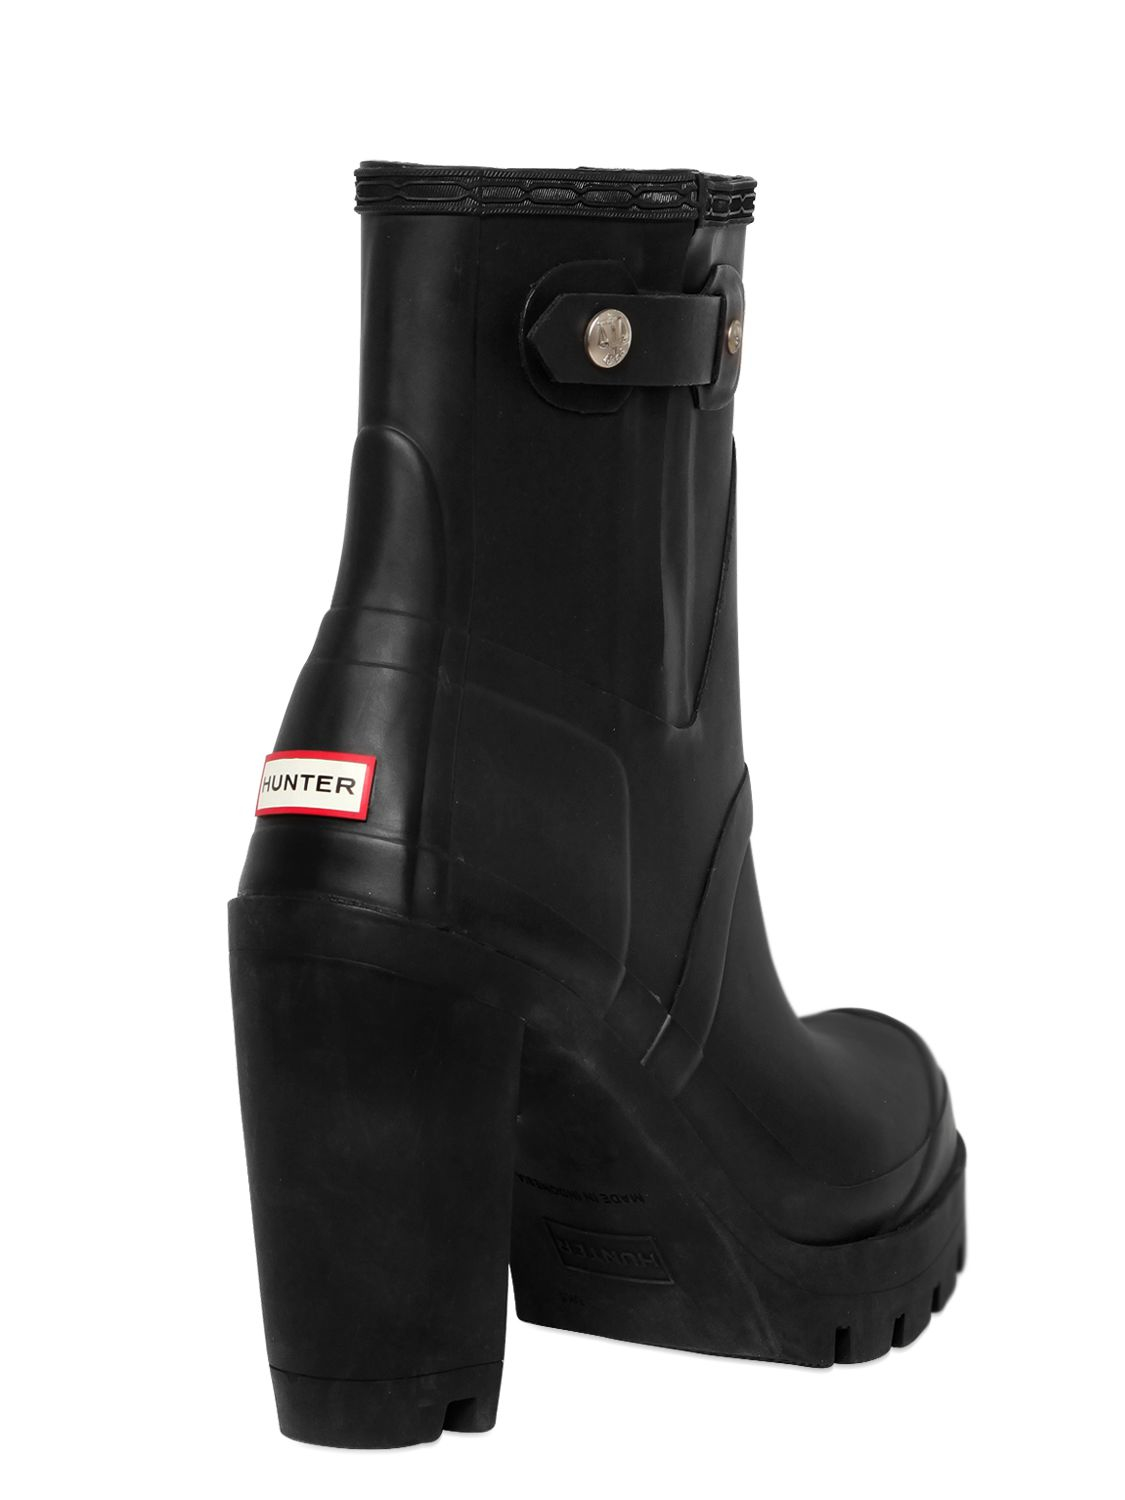 HUNTER 110mm Original High Heel Boots in Black | Lyst